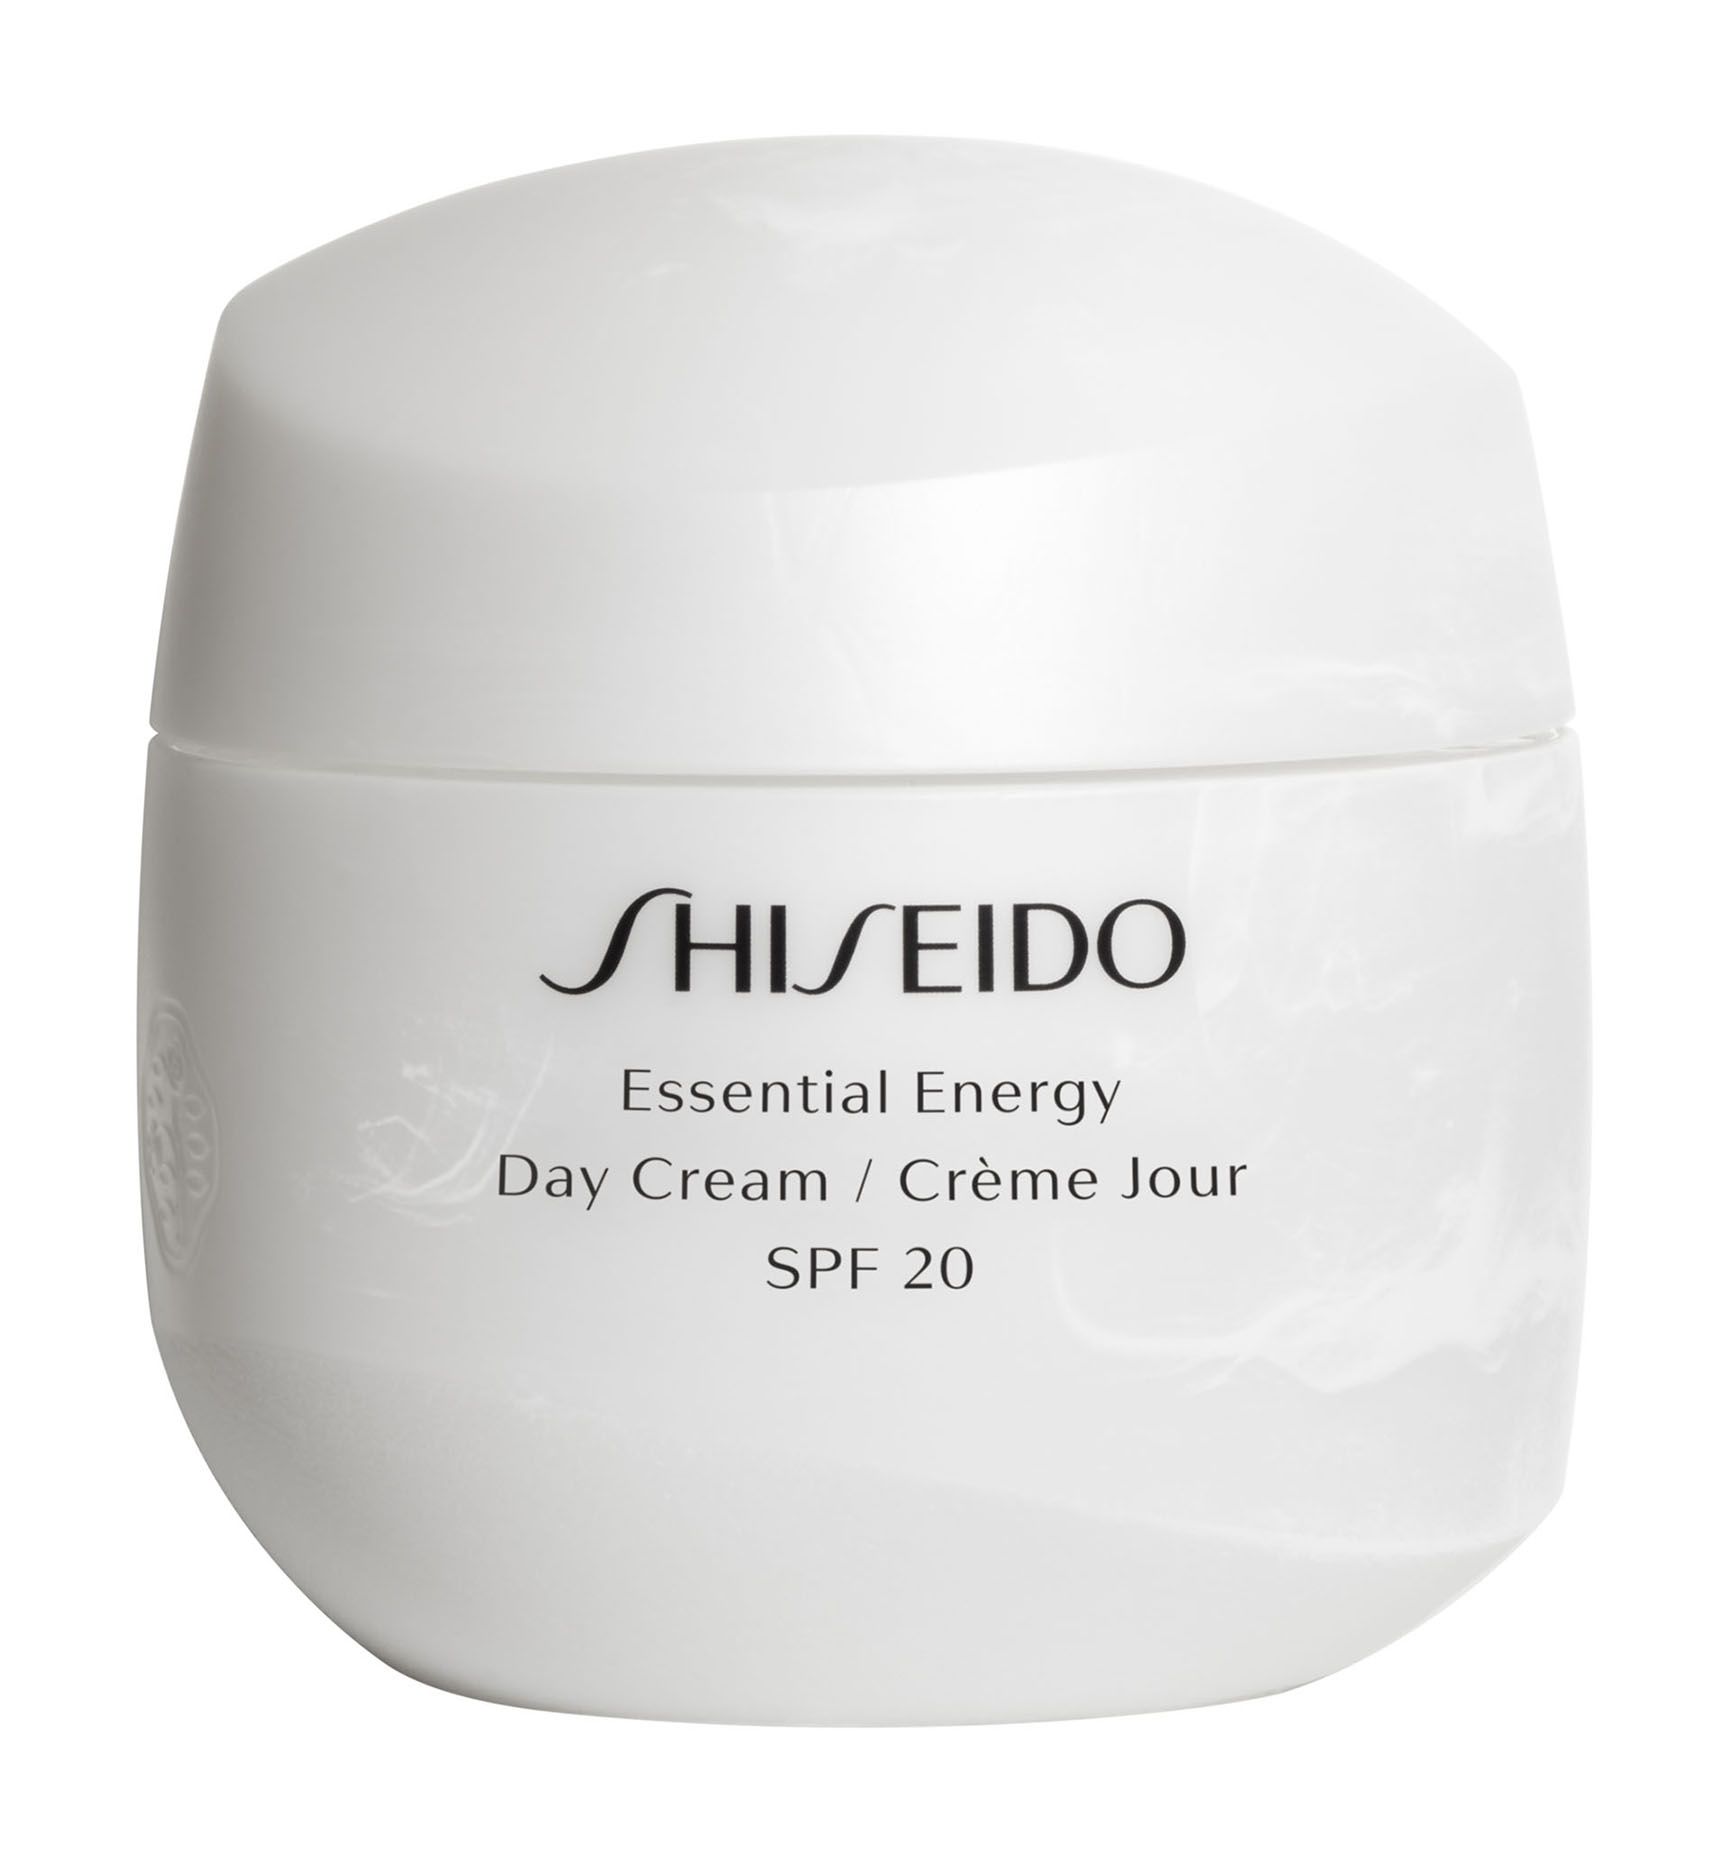 Shiseido увлажняющий. Shiseido Essential Energy Moisturizing Gel Cream. Крем SPF 20. Shiseido Essential Energy Moisturizing Cream Creme hydratante. Шисейдо Essential Energy Moisturizing Cream набор.